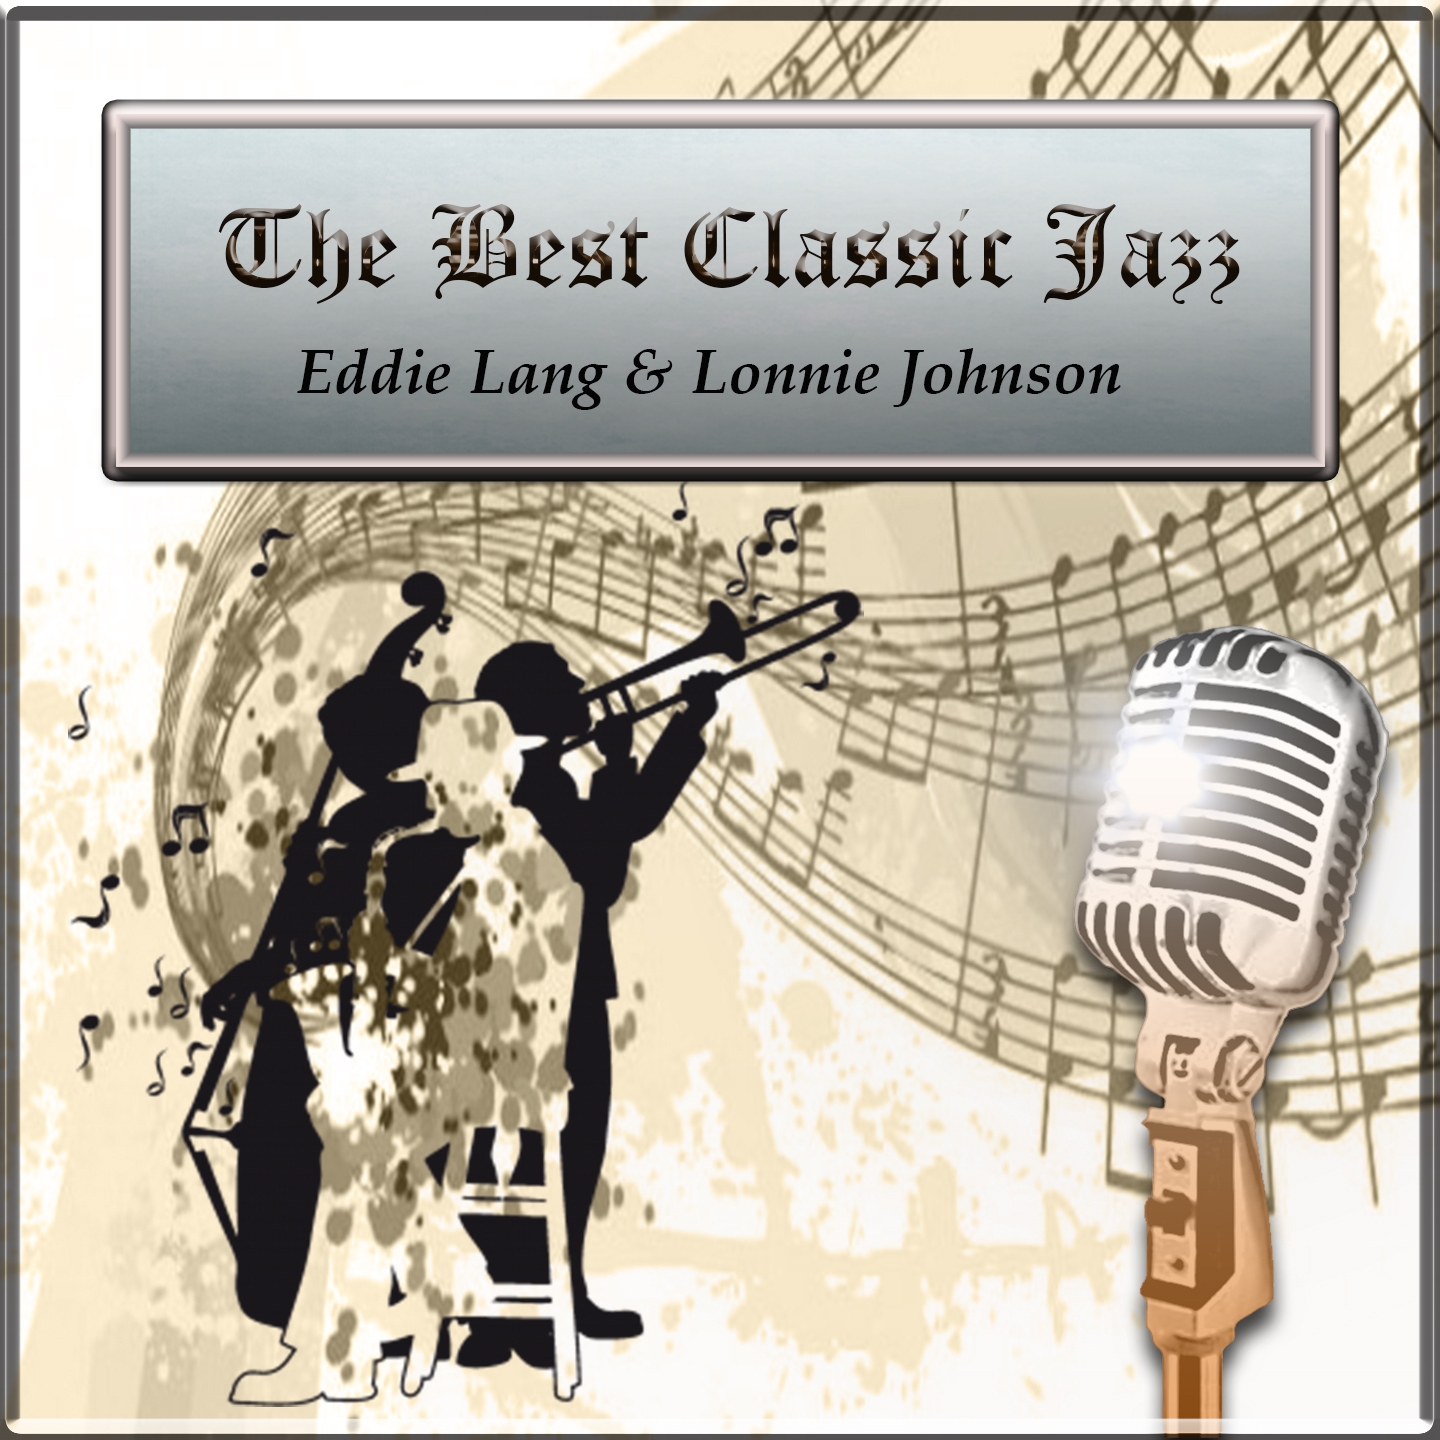 The Best Classic Jazz, Eddie Lang & Lonnie Johnson